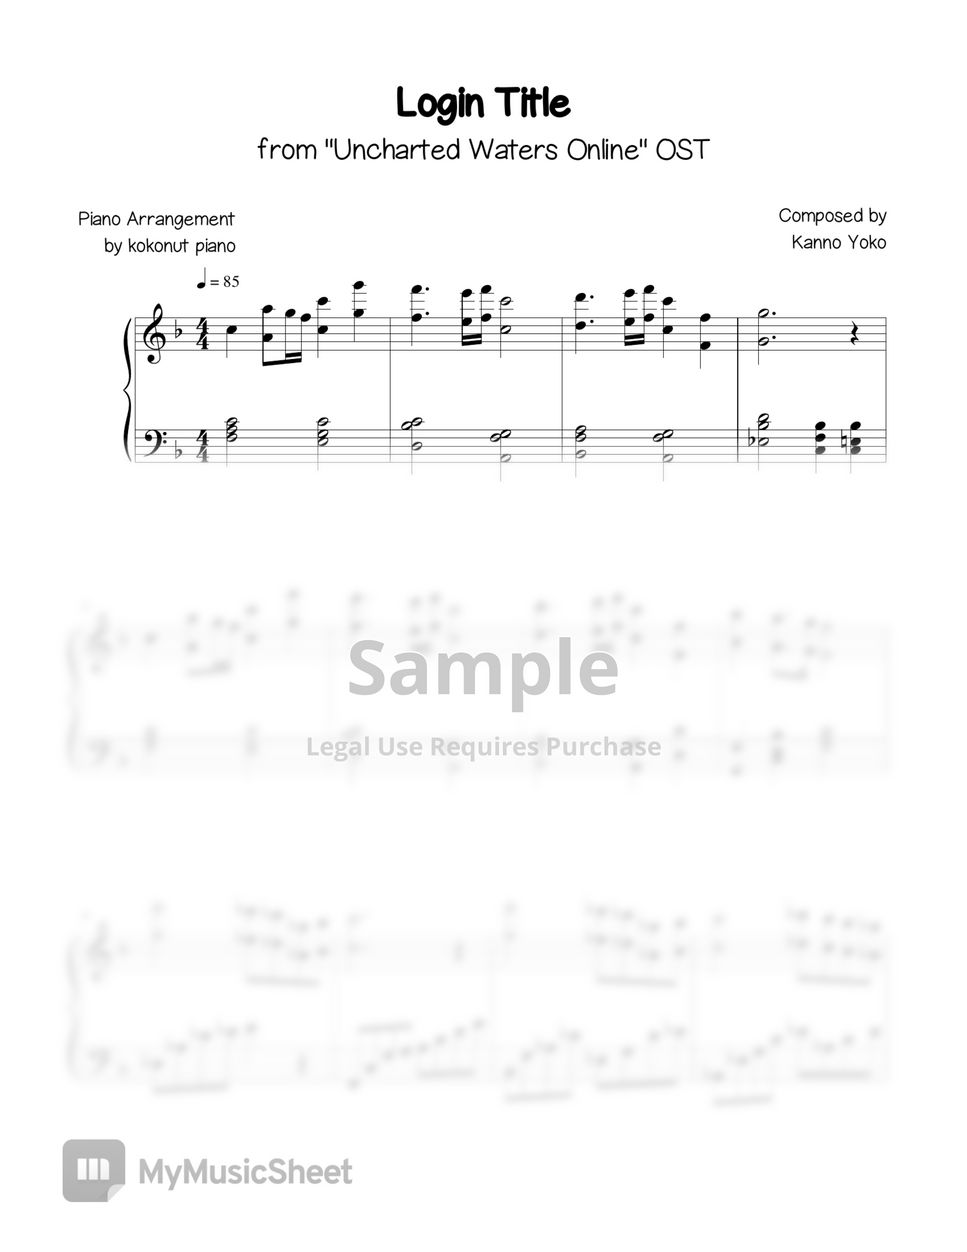 Uncharted Waters OST - Login Title by kokonut piano